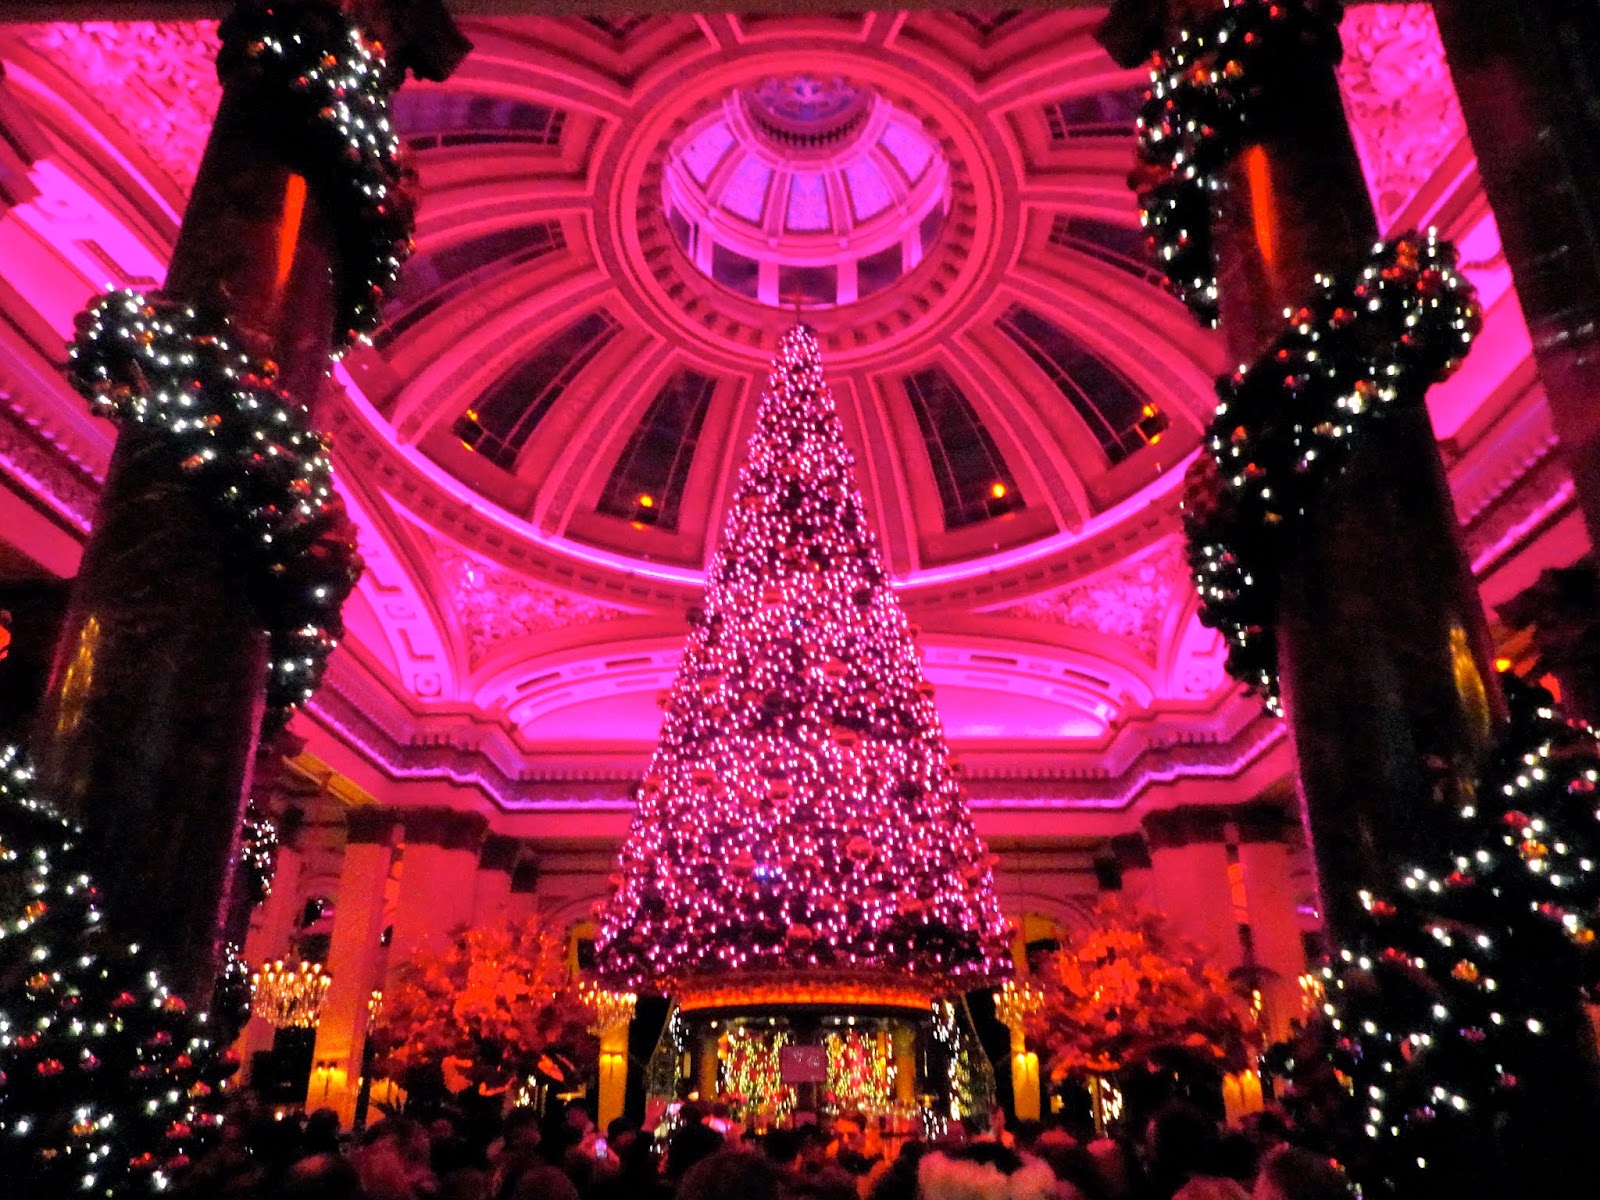 Christmas tree & lights inside The Dome Restaurant in Edinburgh